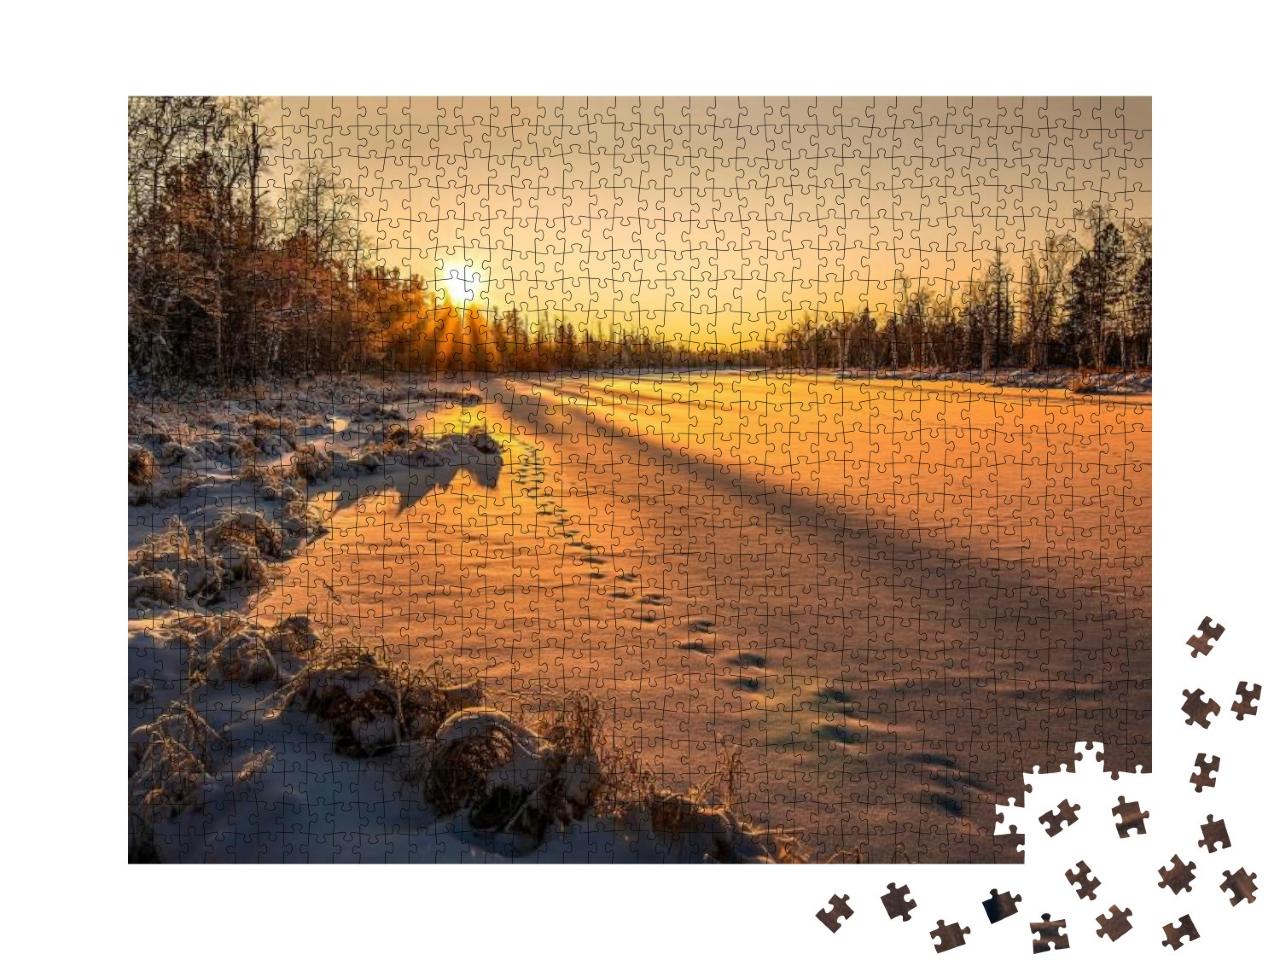 Puzzle 1000 Teile „Sonnenuntergang im Winter “